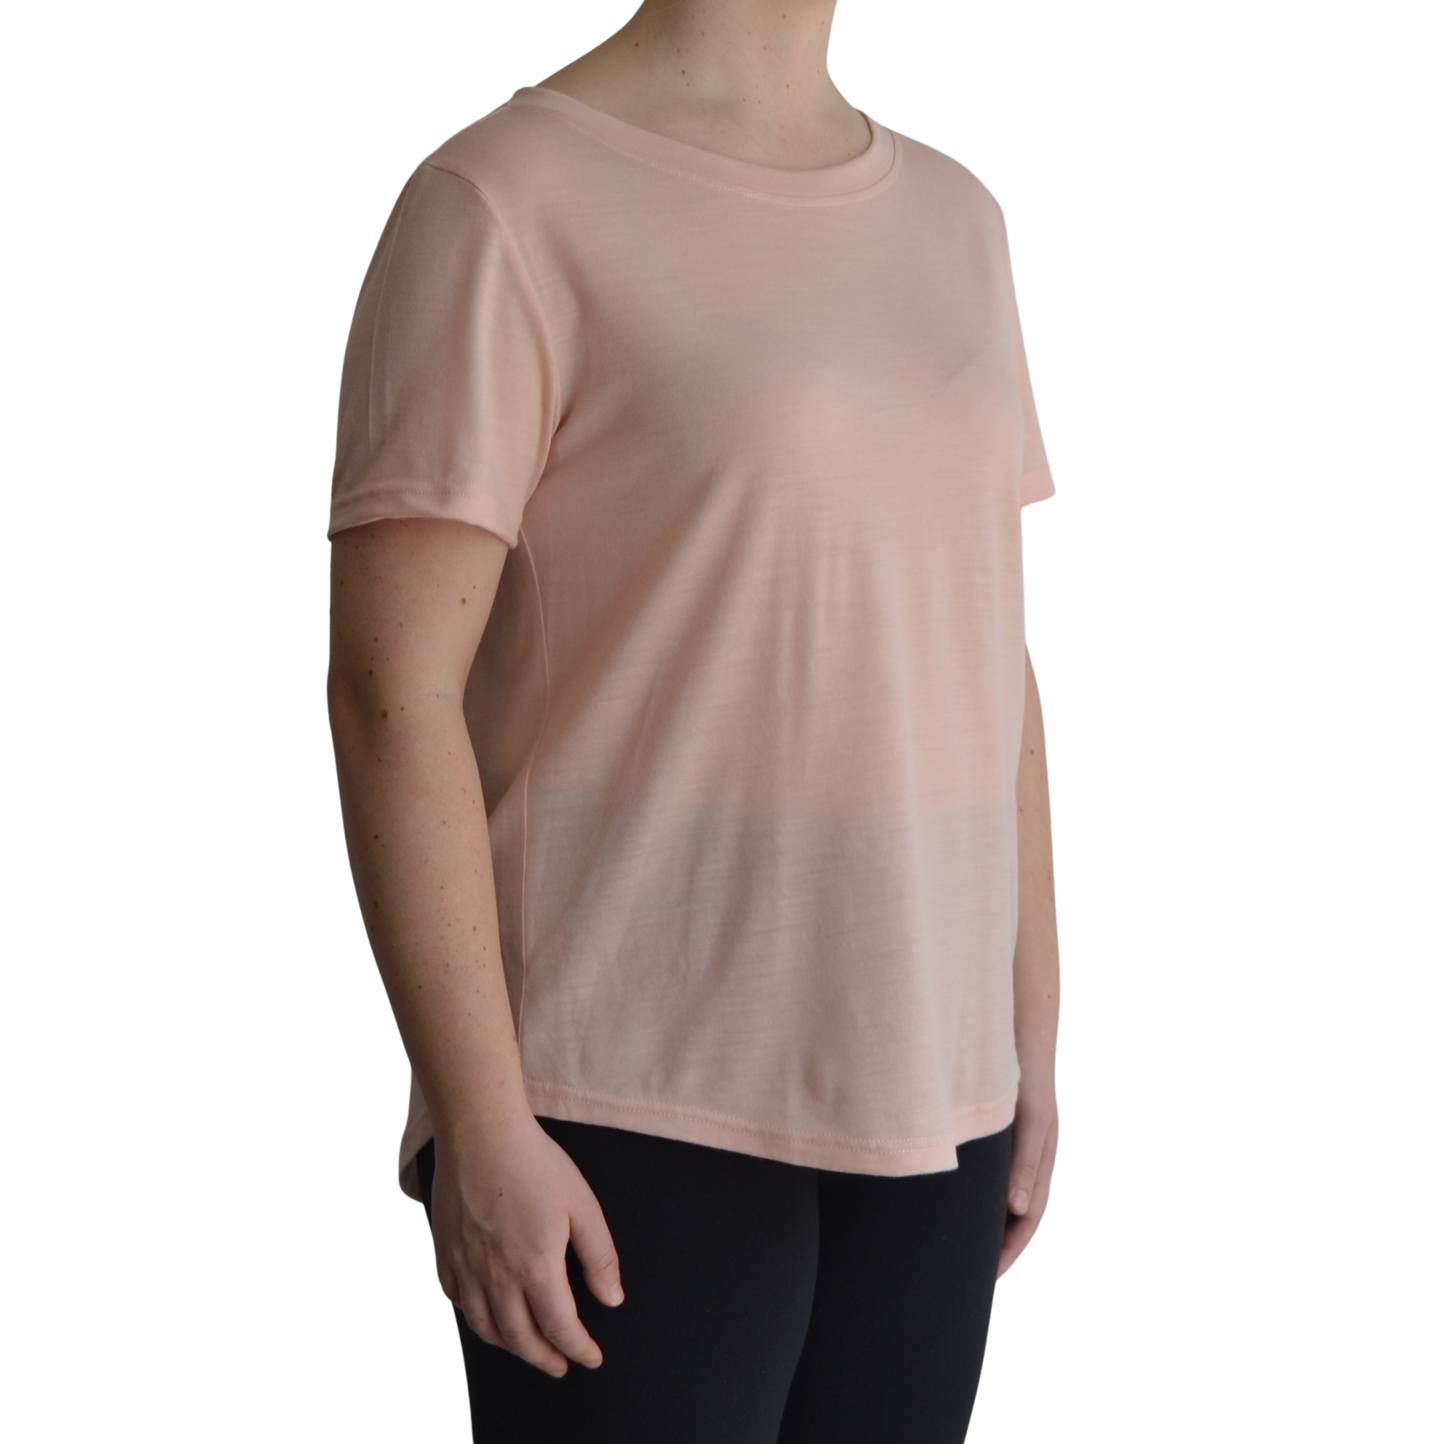 Links merino short sleeve t-shirt in petal light pink. Model faces forward on a 45 degree angle